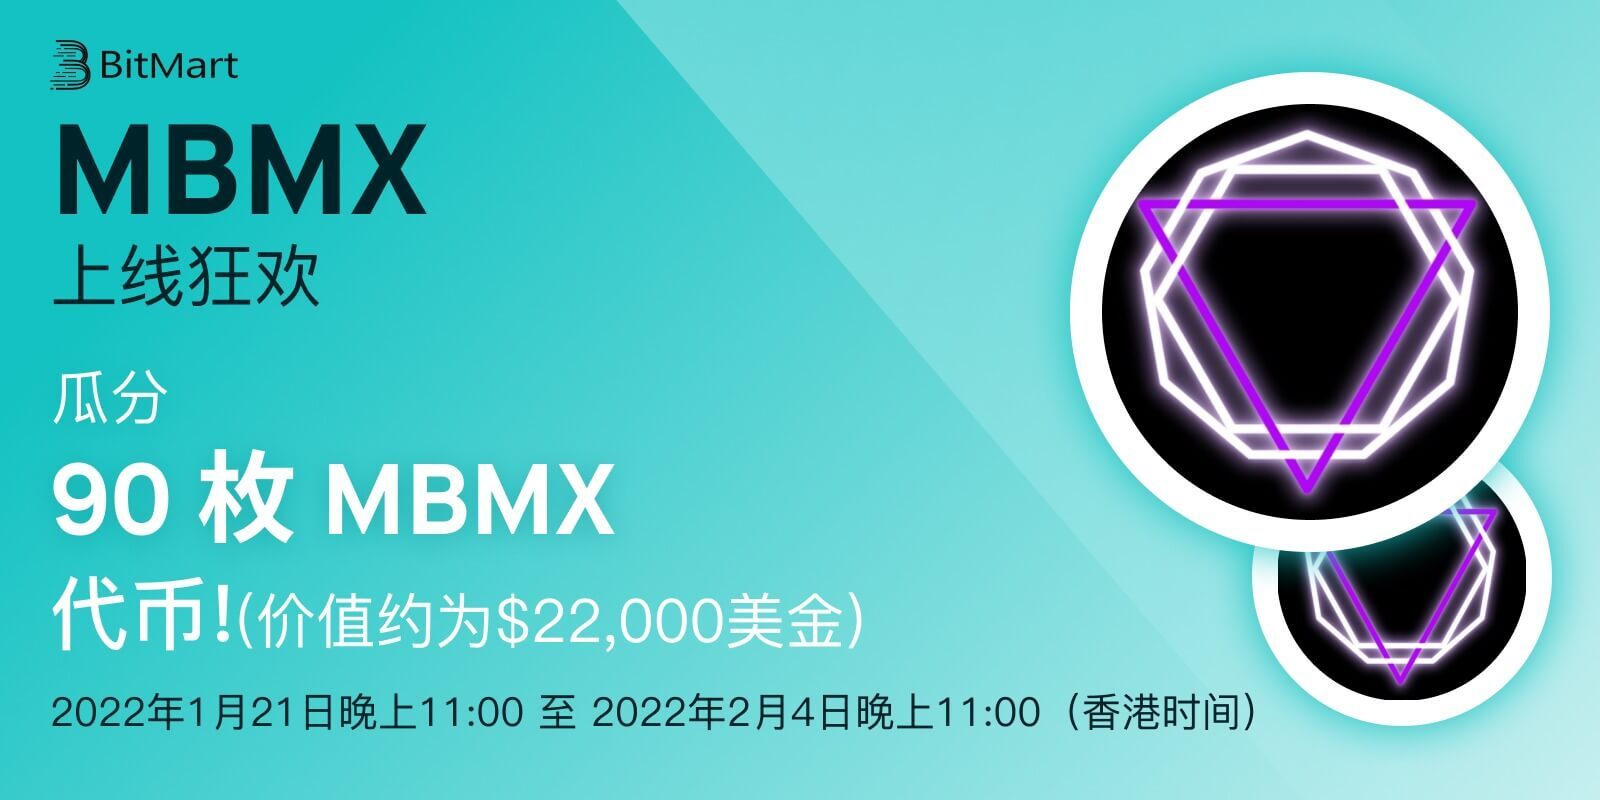 MBMX-cam-cn_2x.jpg